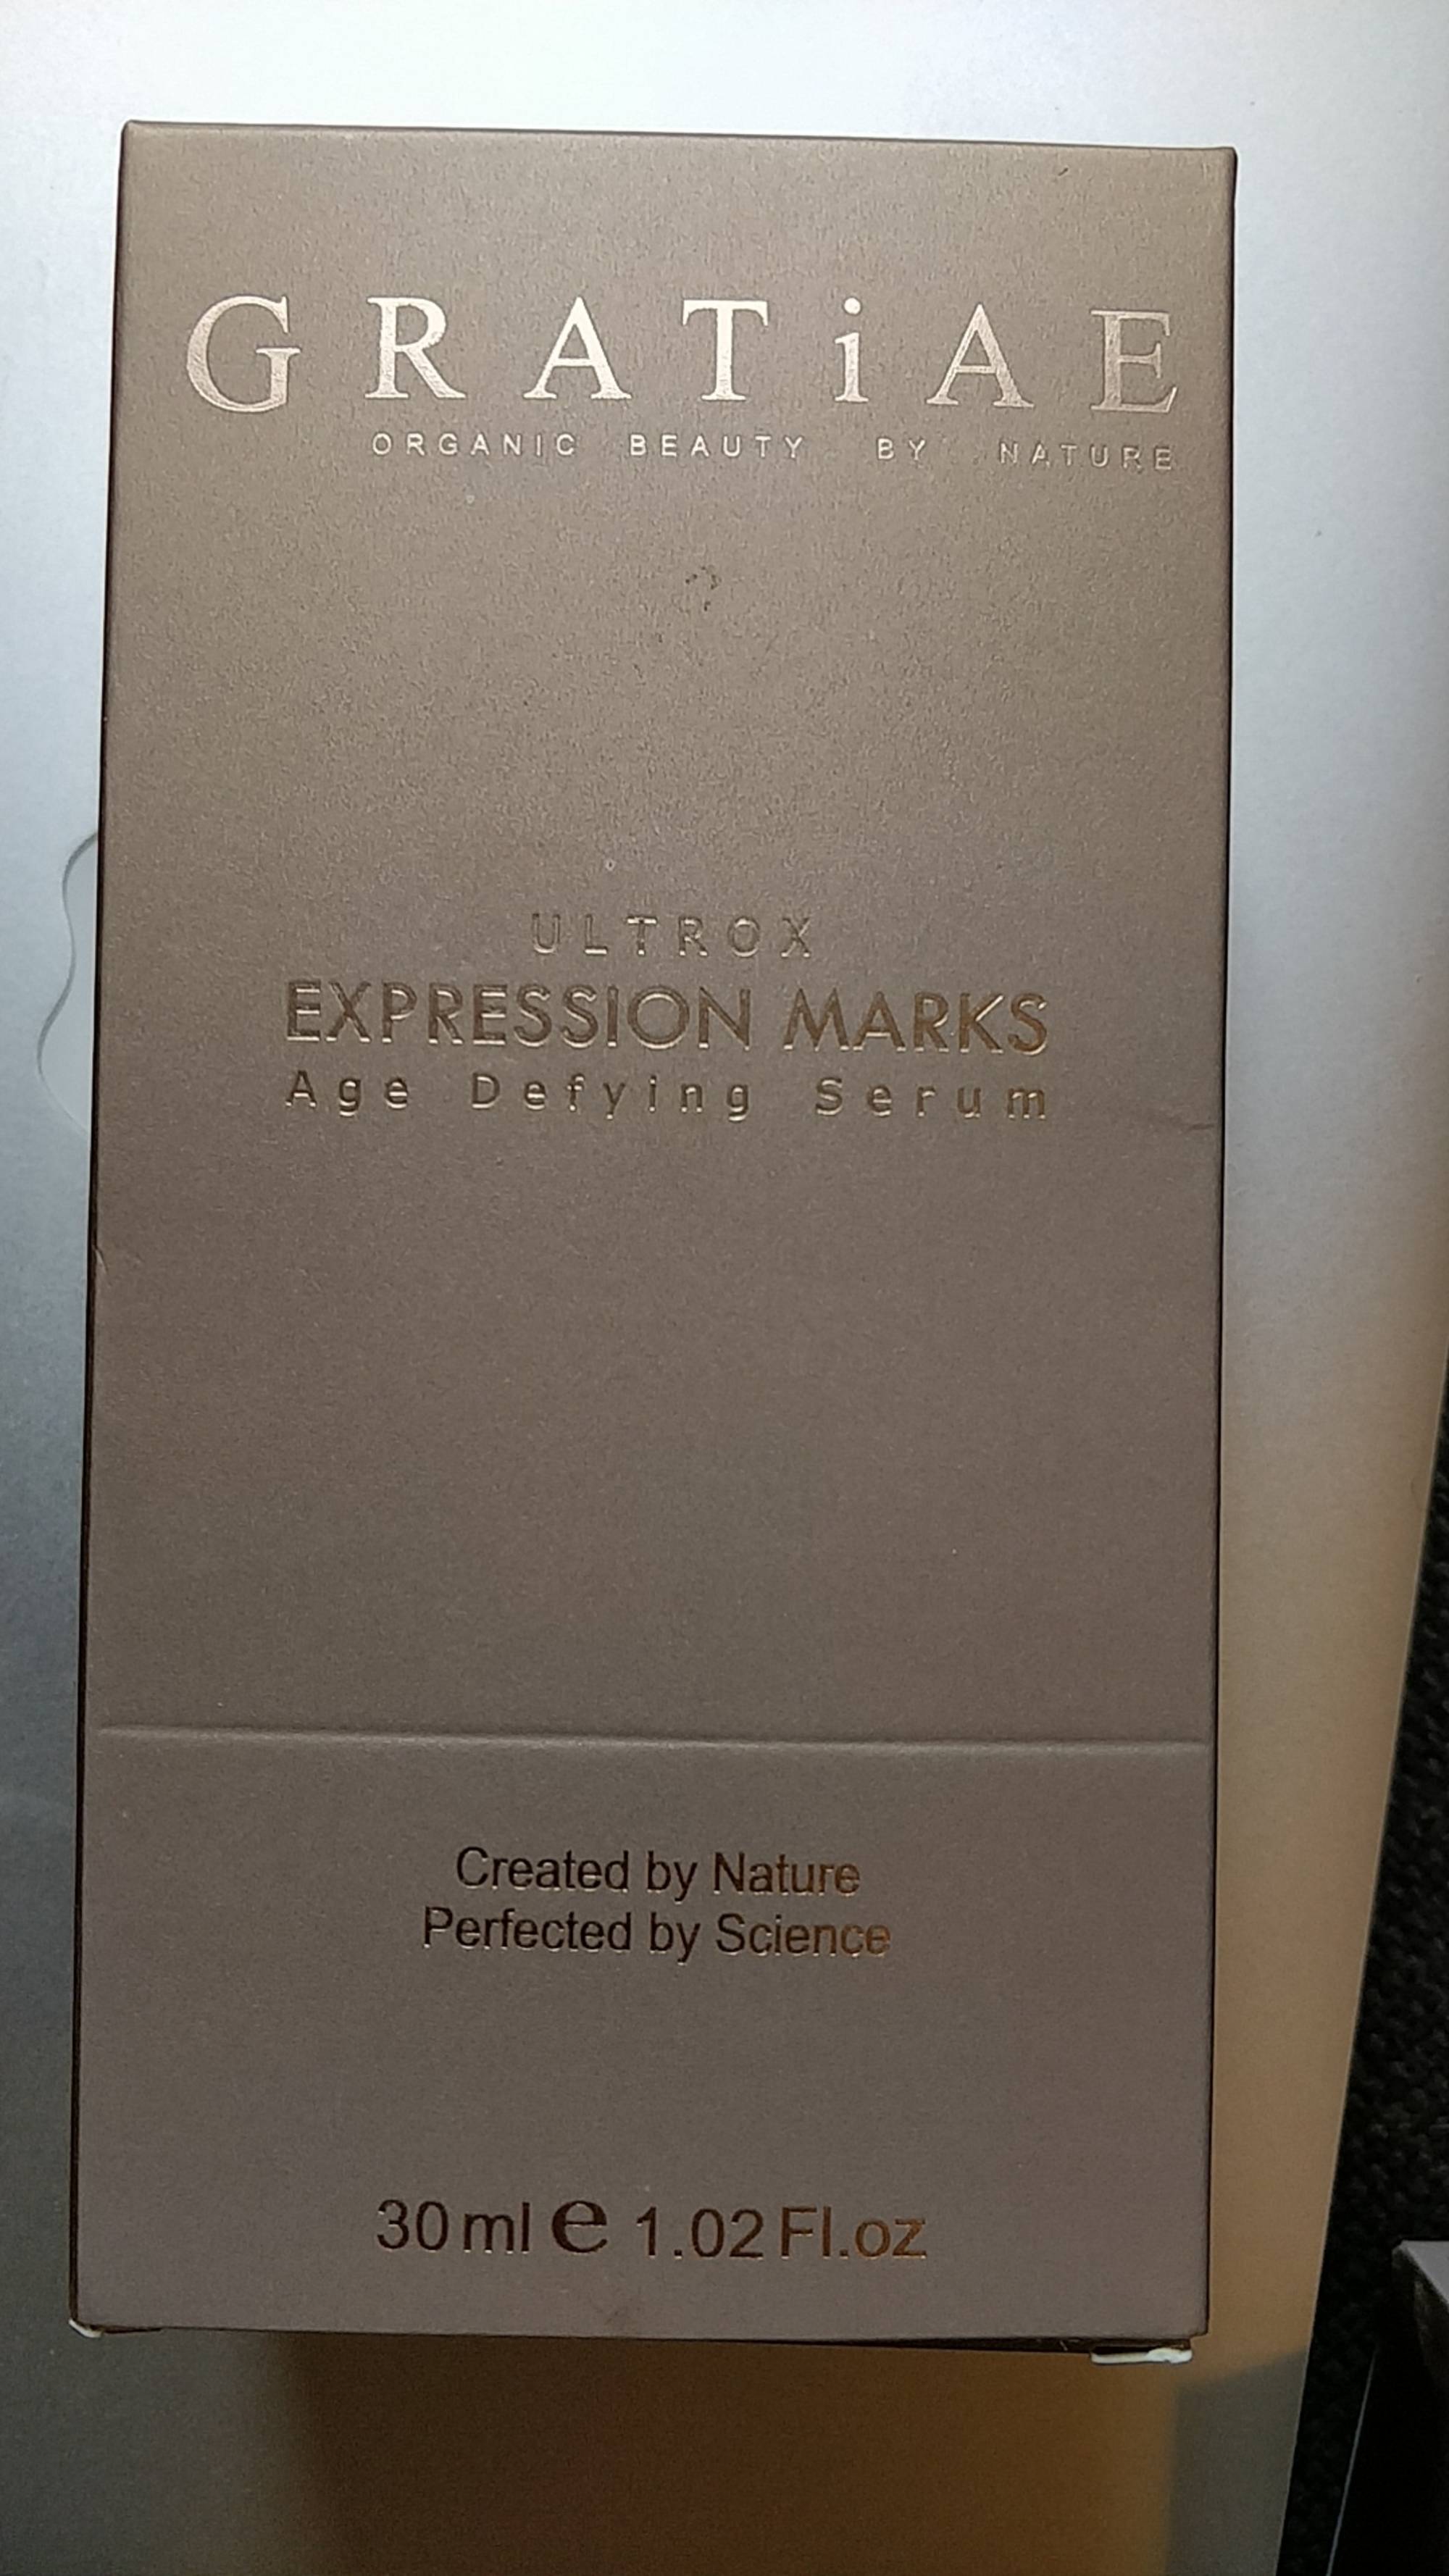 GRATIAE - Ultrox Expression Marks - Age Defying serum